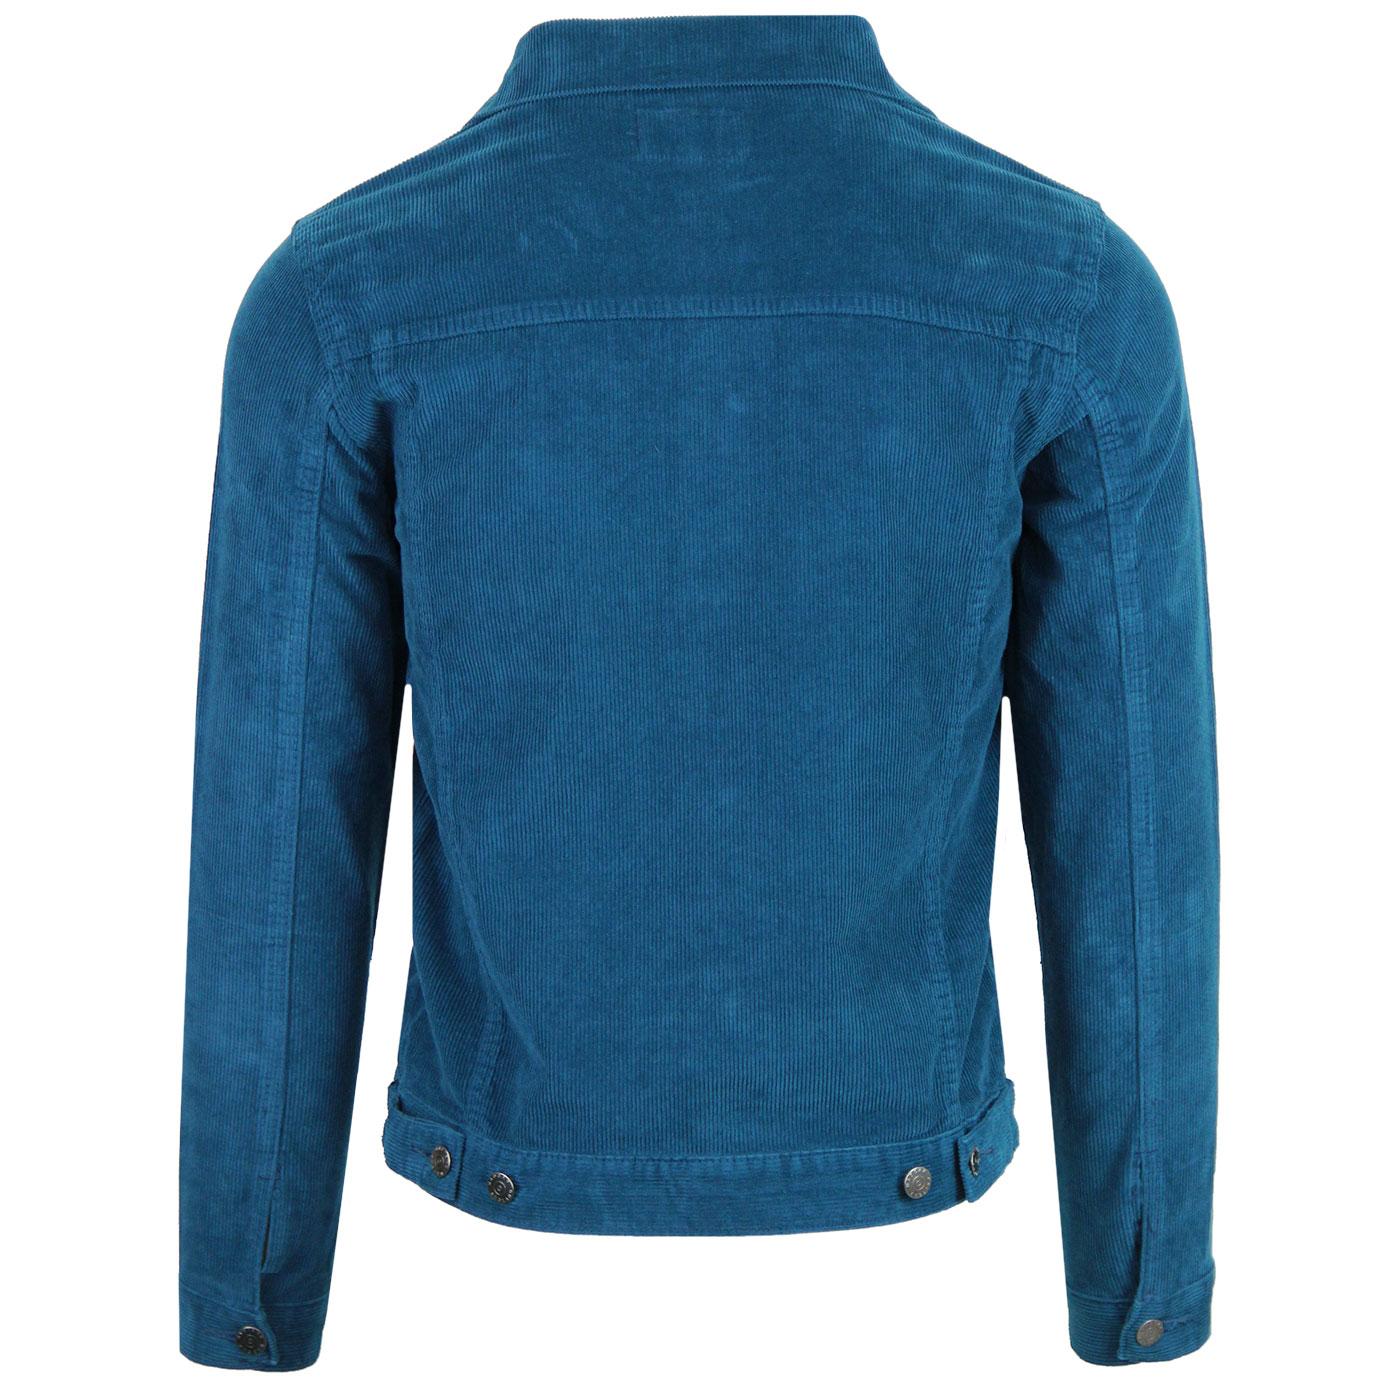 MADCAP ENGLAND Woburn Cord Western Jacket in Ink Blue